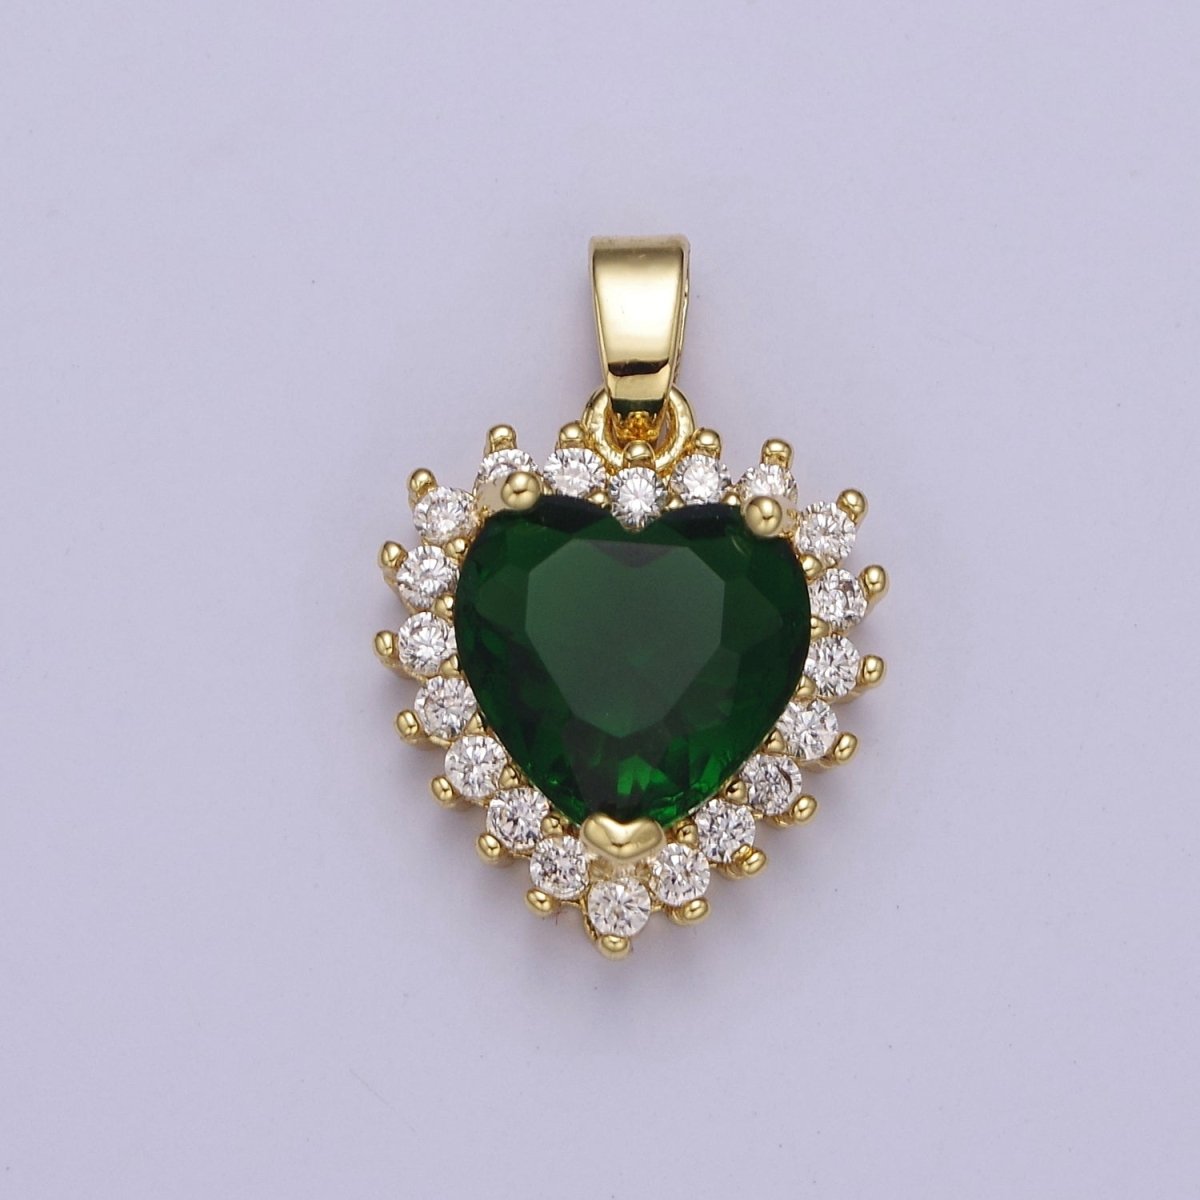 Micro Pave Heart CZ Pendant Charm For Jewelry Necklace Making, J-541 J-543 J-544 J-546 - DLUXCA